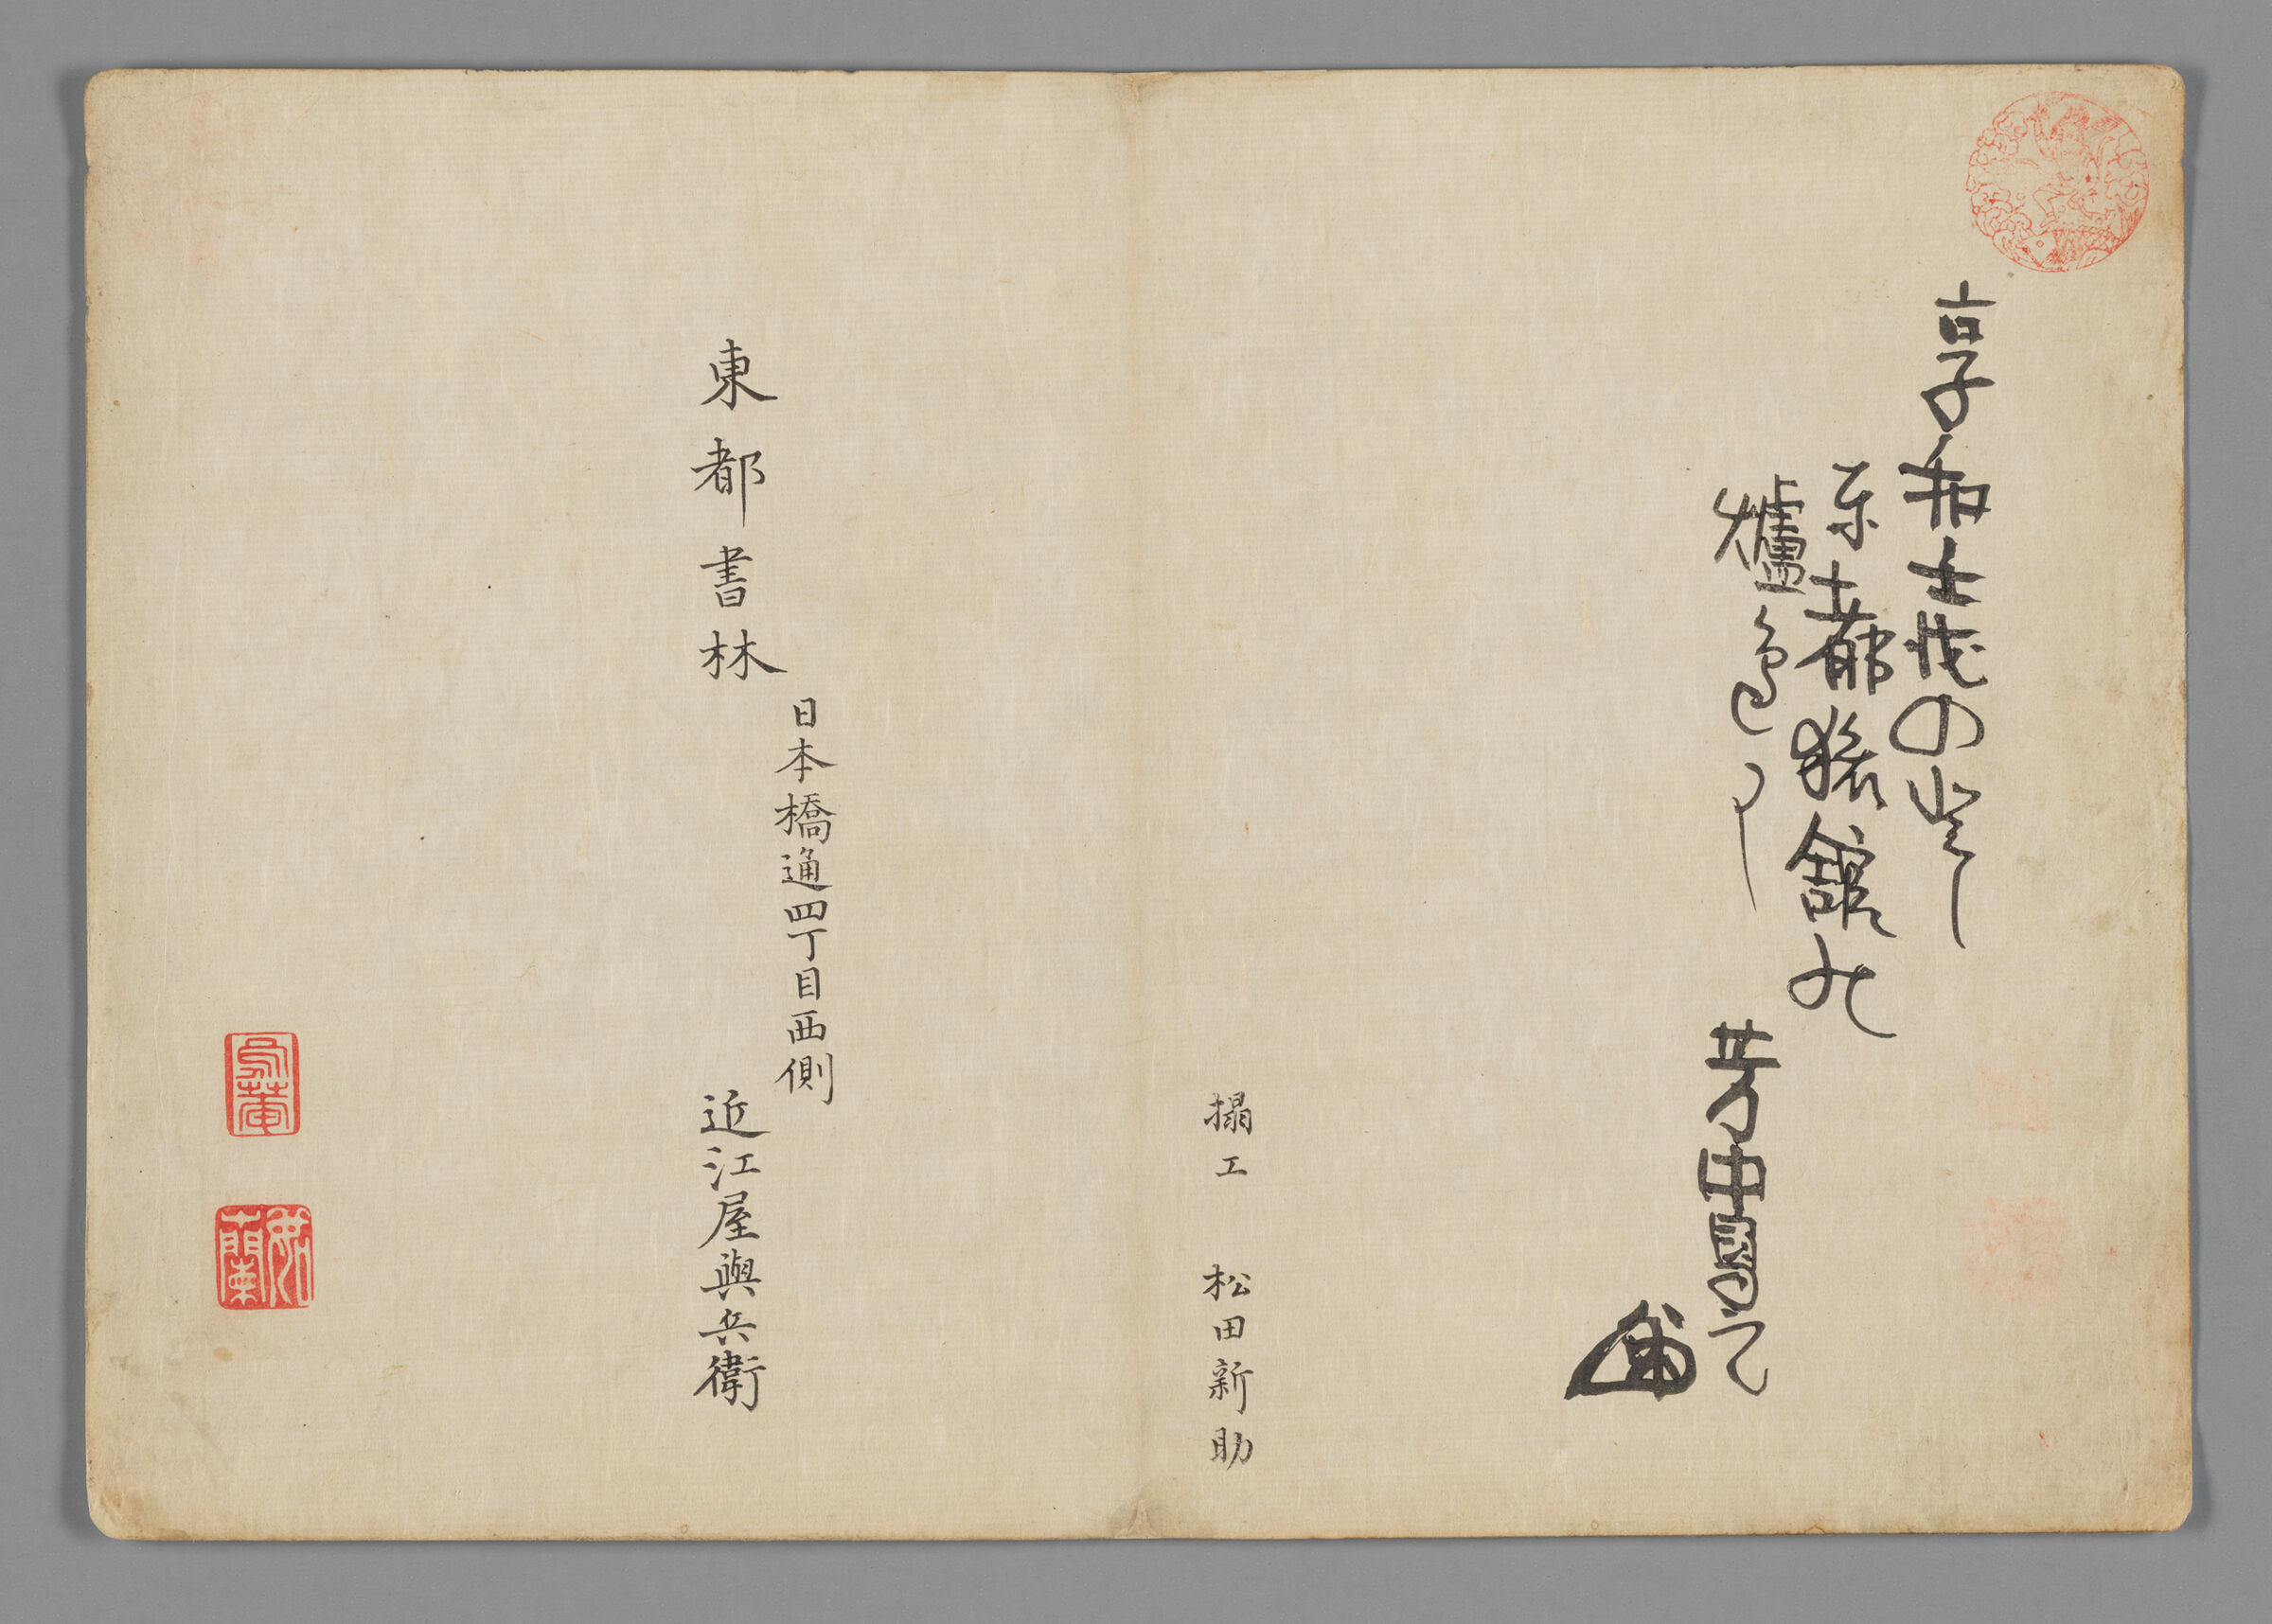 Postscript From The Kōrin Gafu (Kōrin Picture Album)